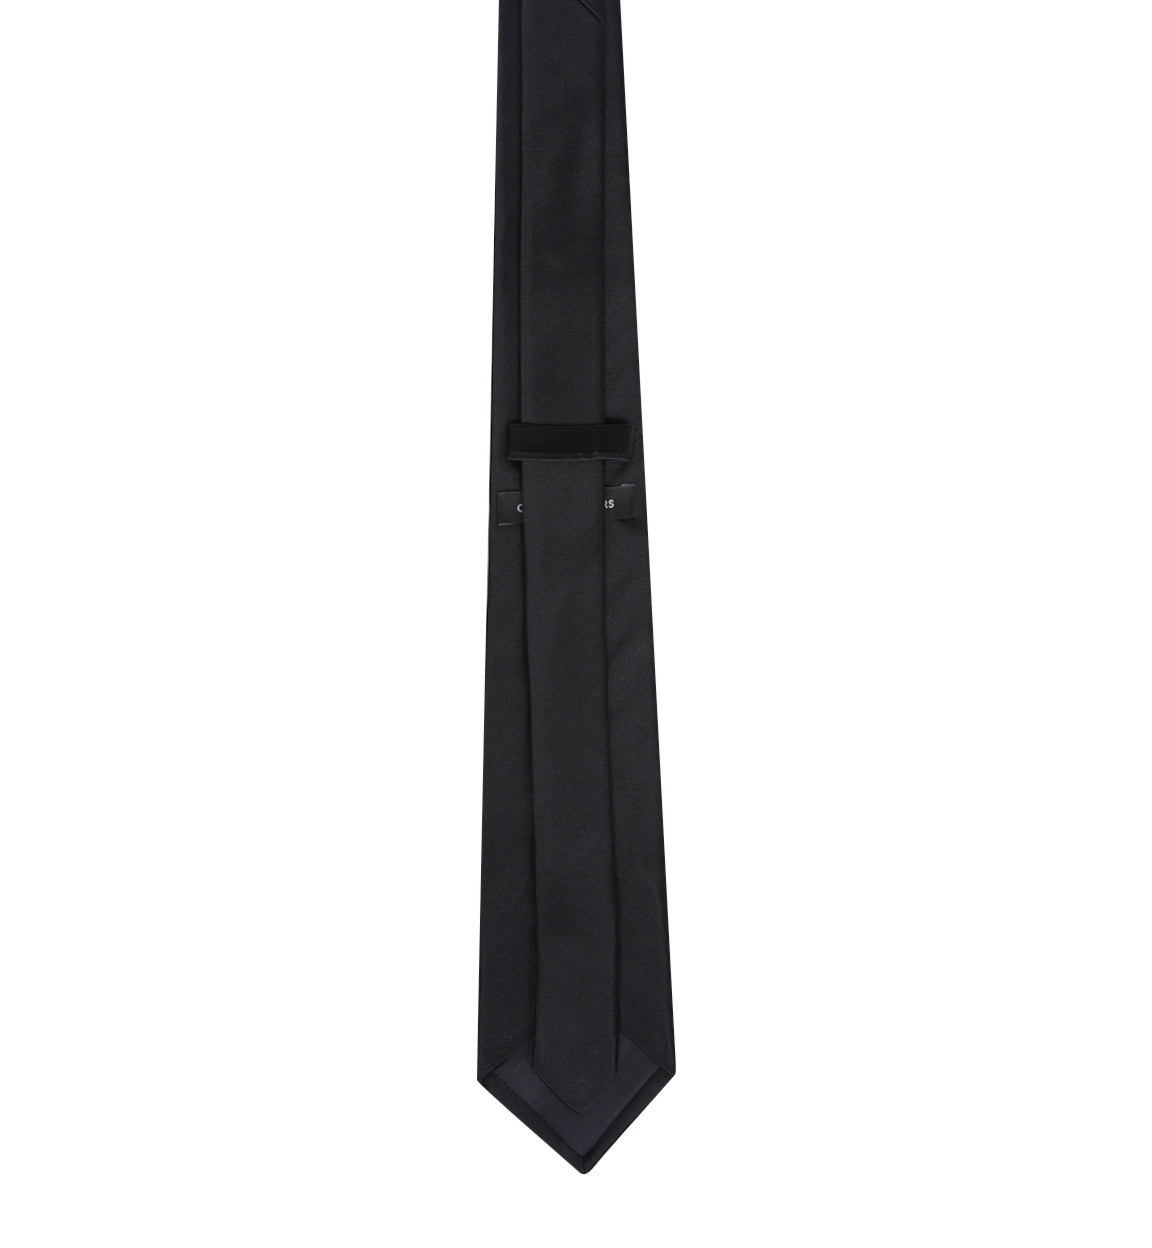 Black Silk Tie